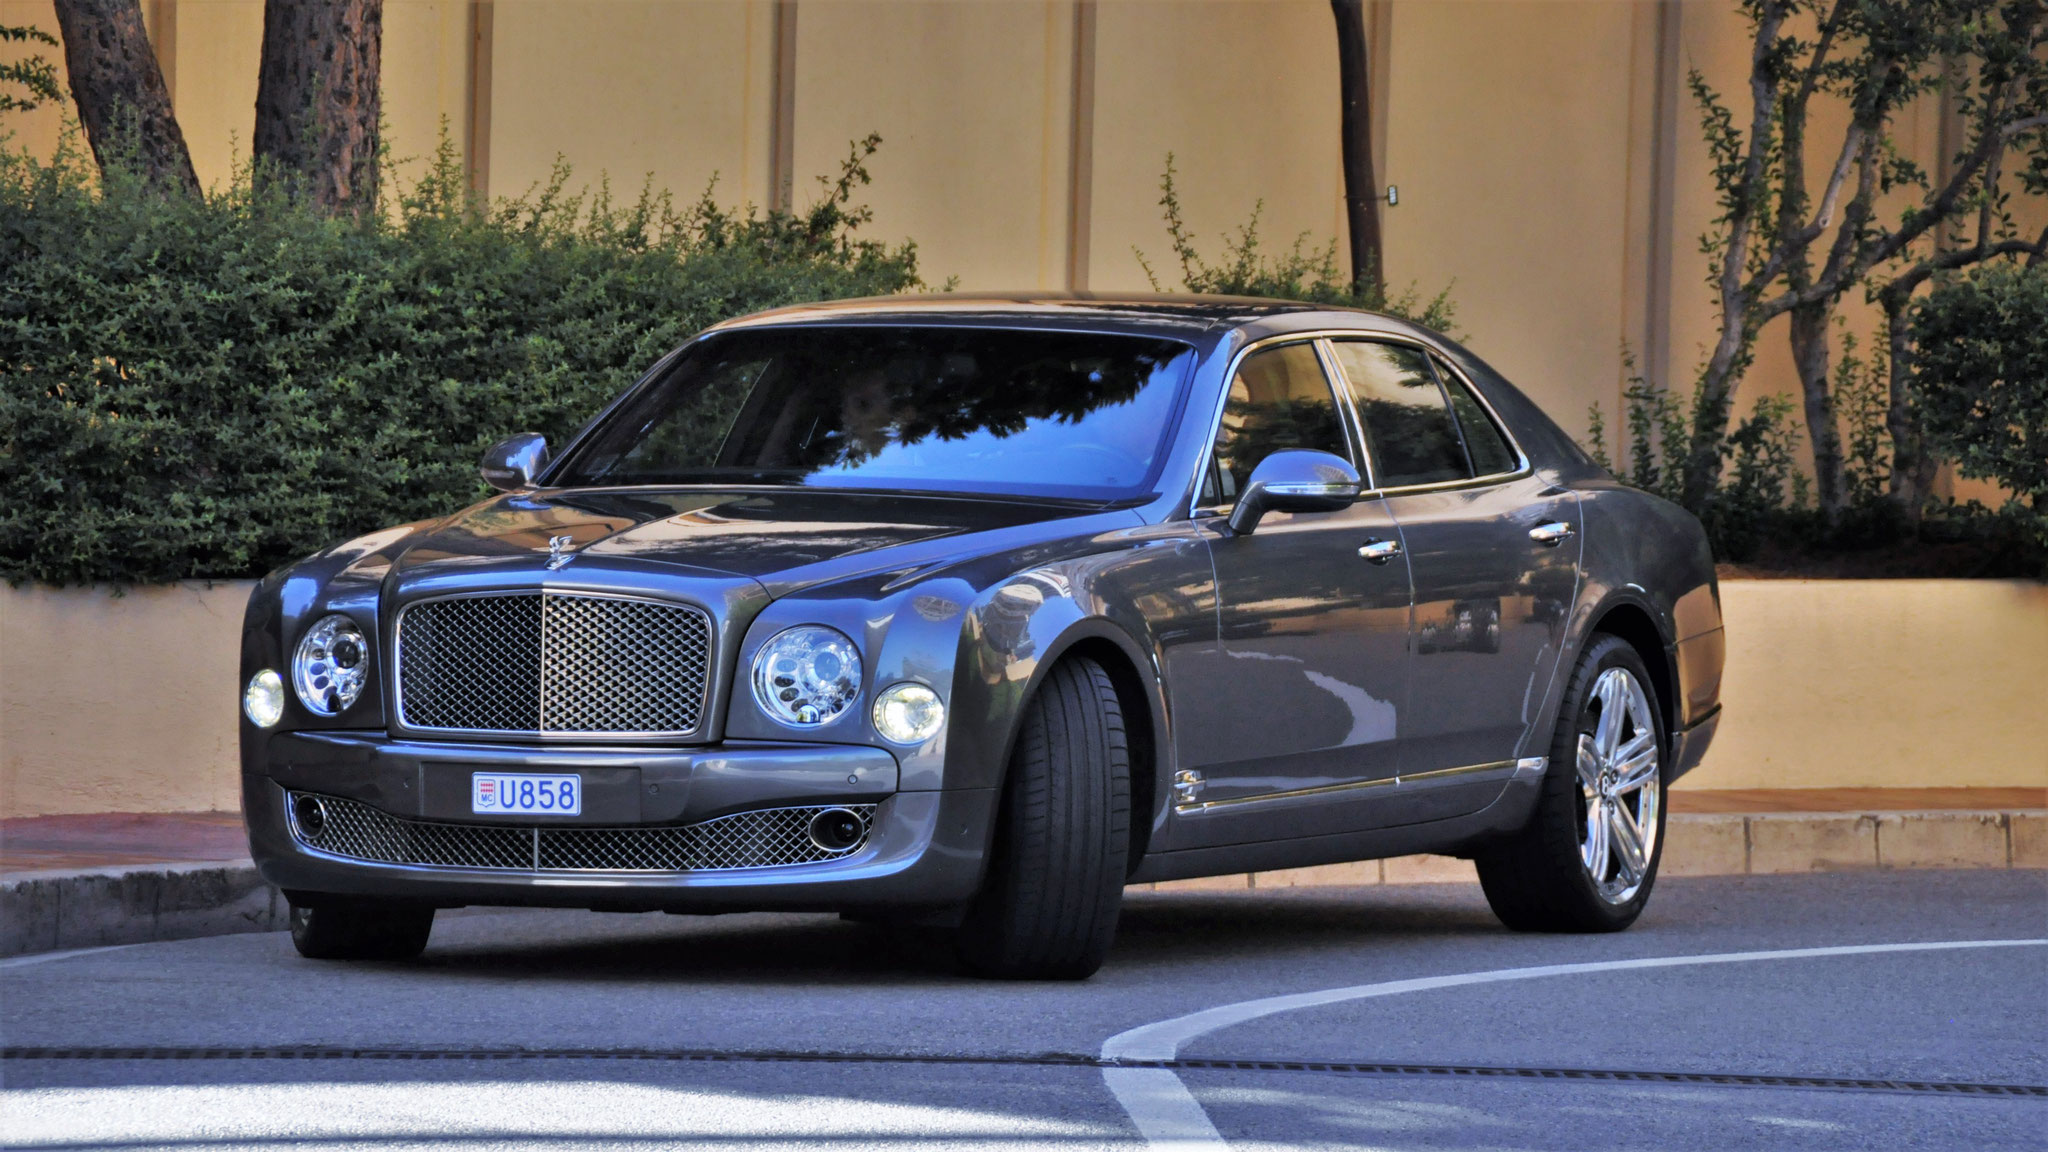 Bentley Mulsanne - U858 (MC)